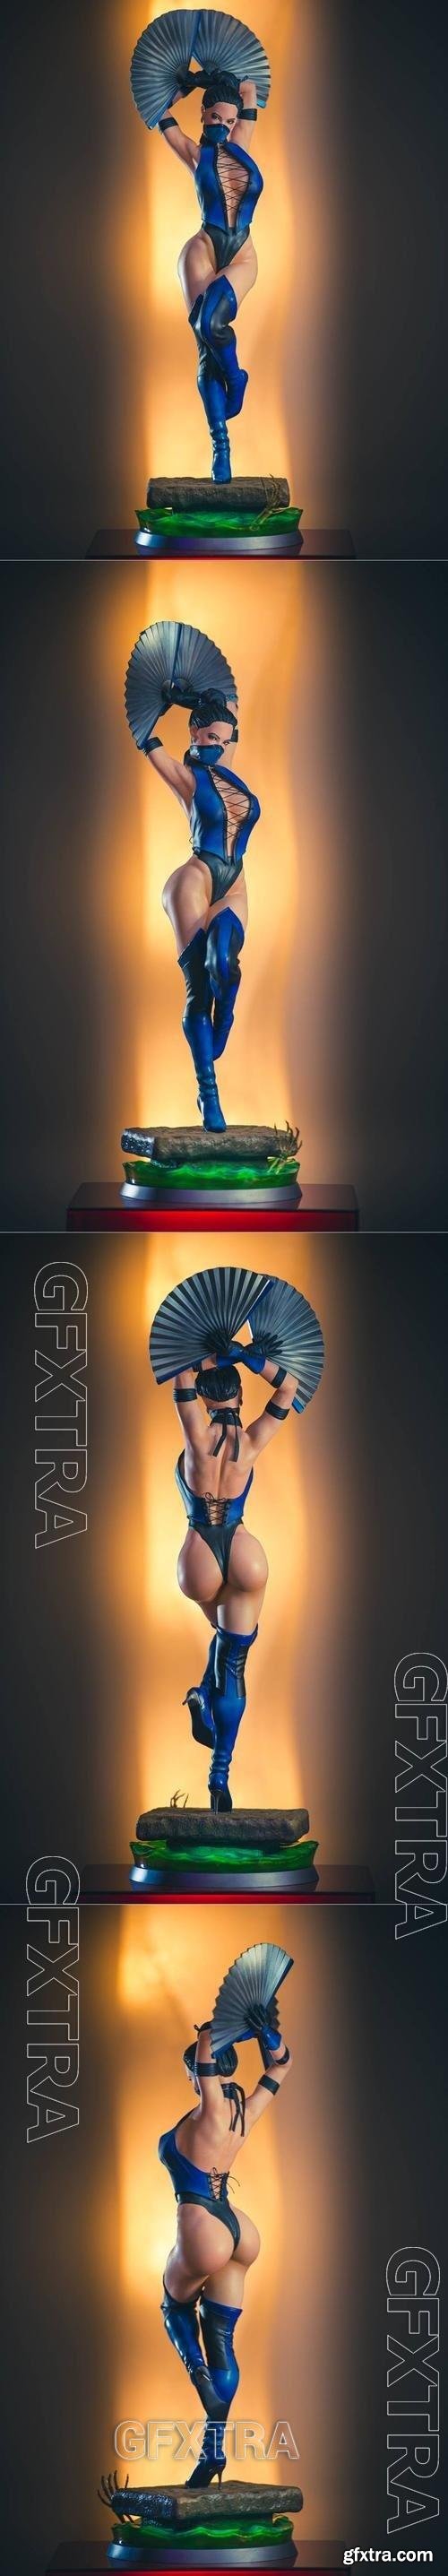 Kitana Statue - Mortal Kombat 3D Printable